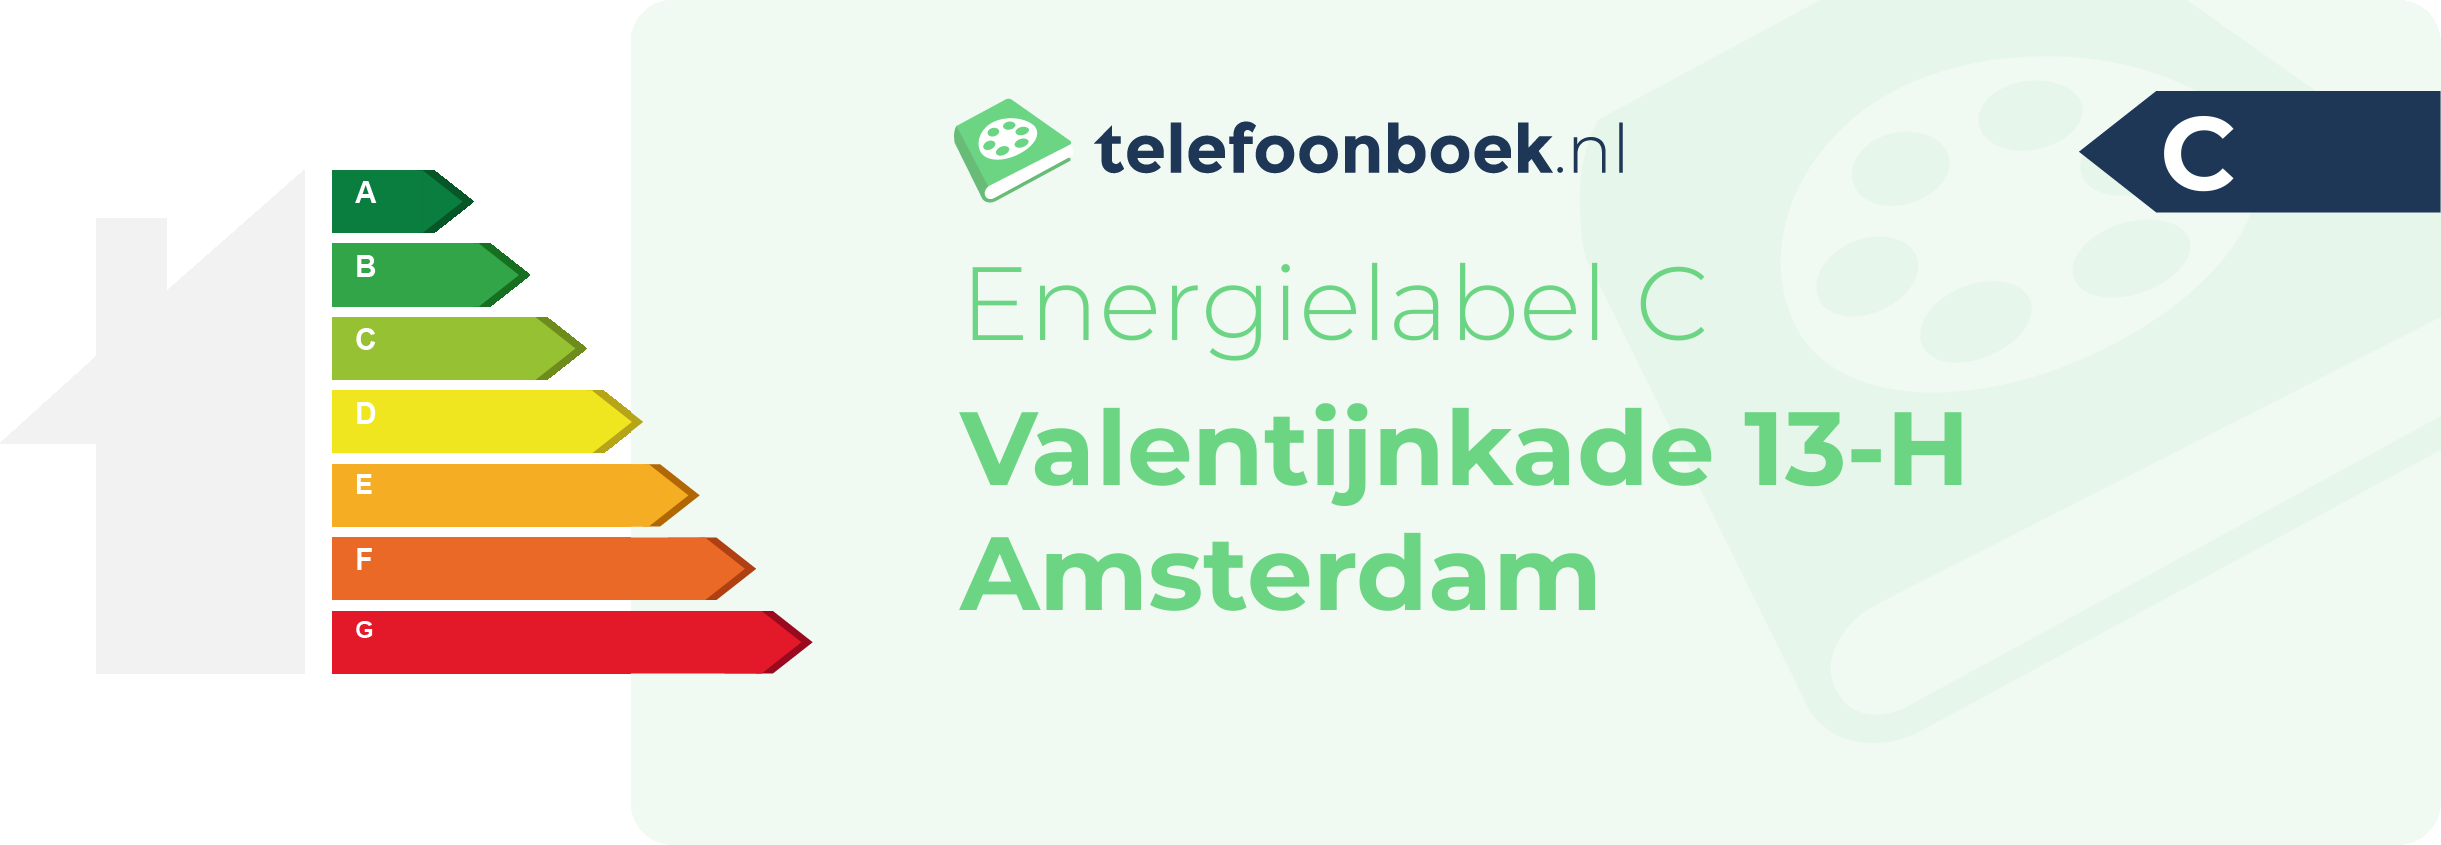 Energielabel Valentijnkade 13-H Amsterdam